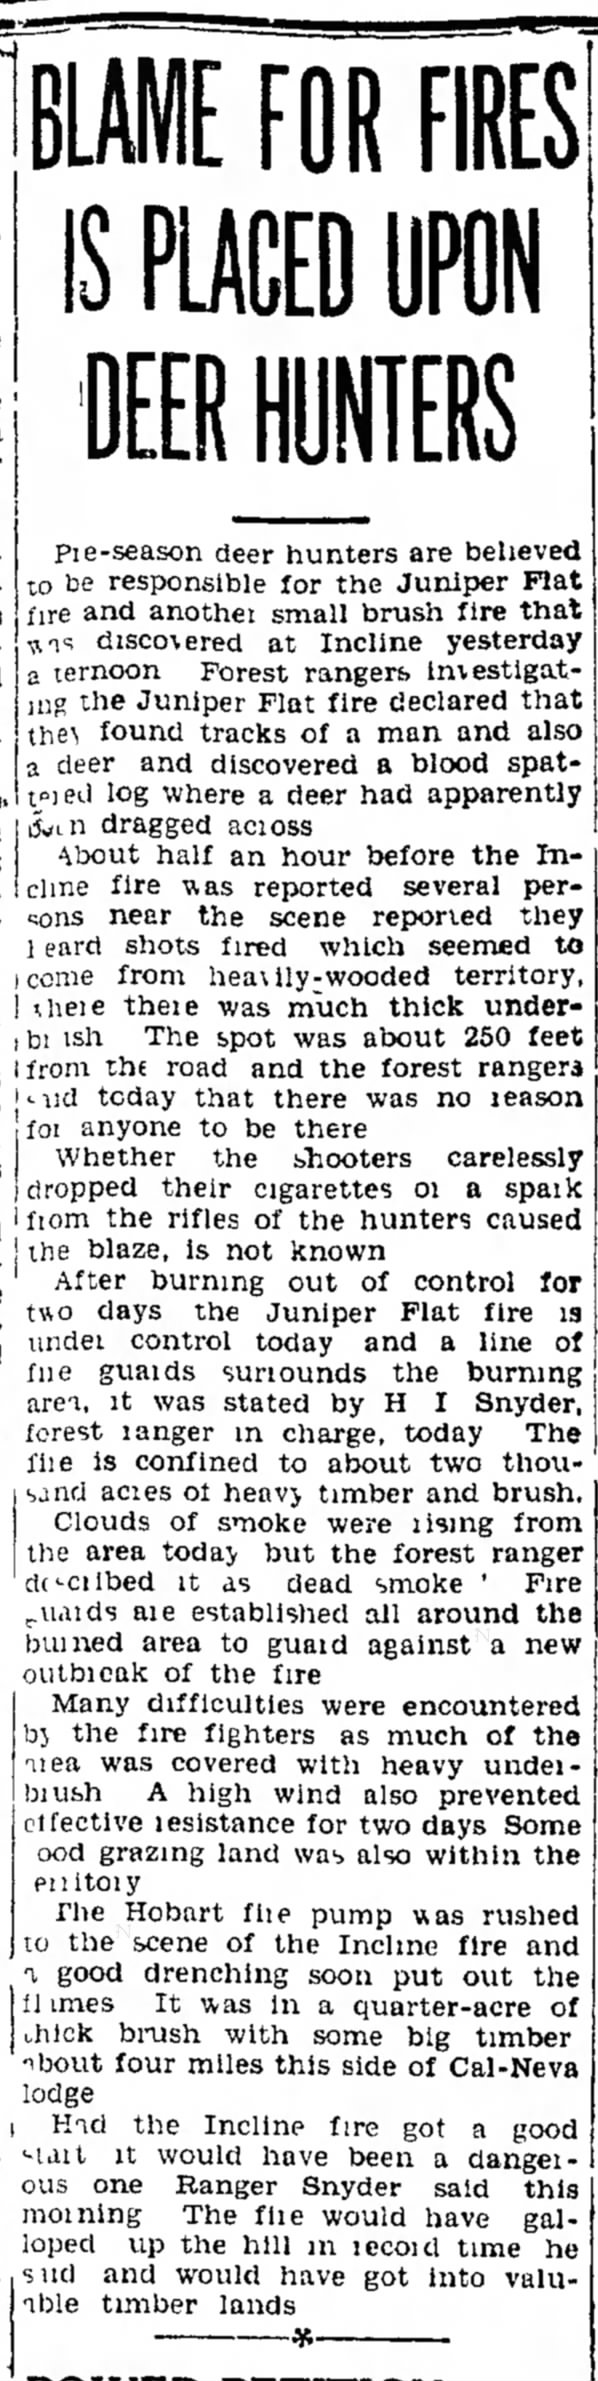 Reno Gazette - 15 Aug 1928 - Page 8 - Cal-Neva Lodge